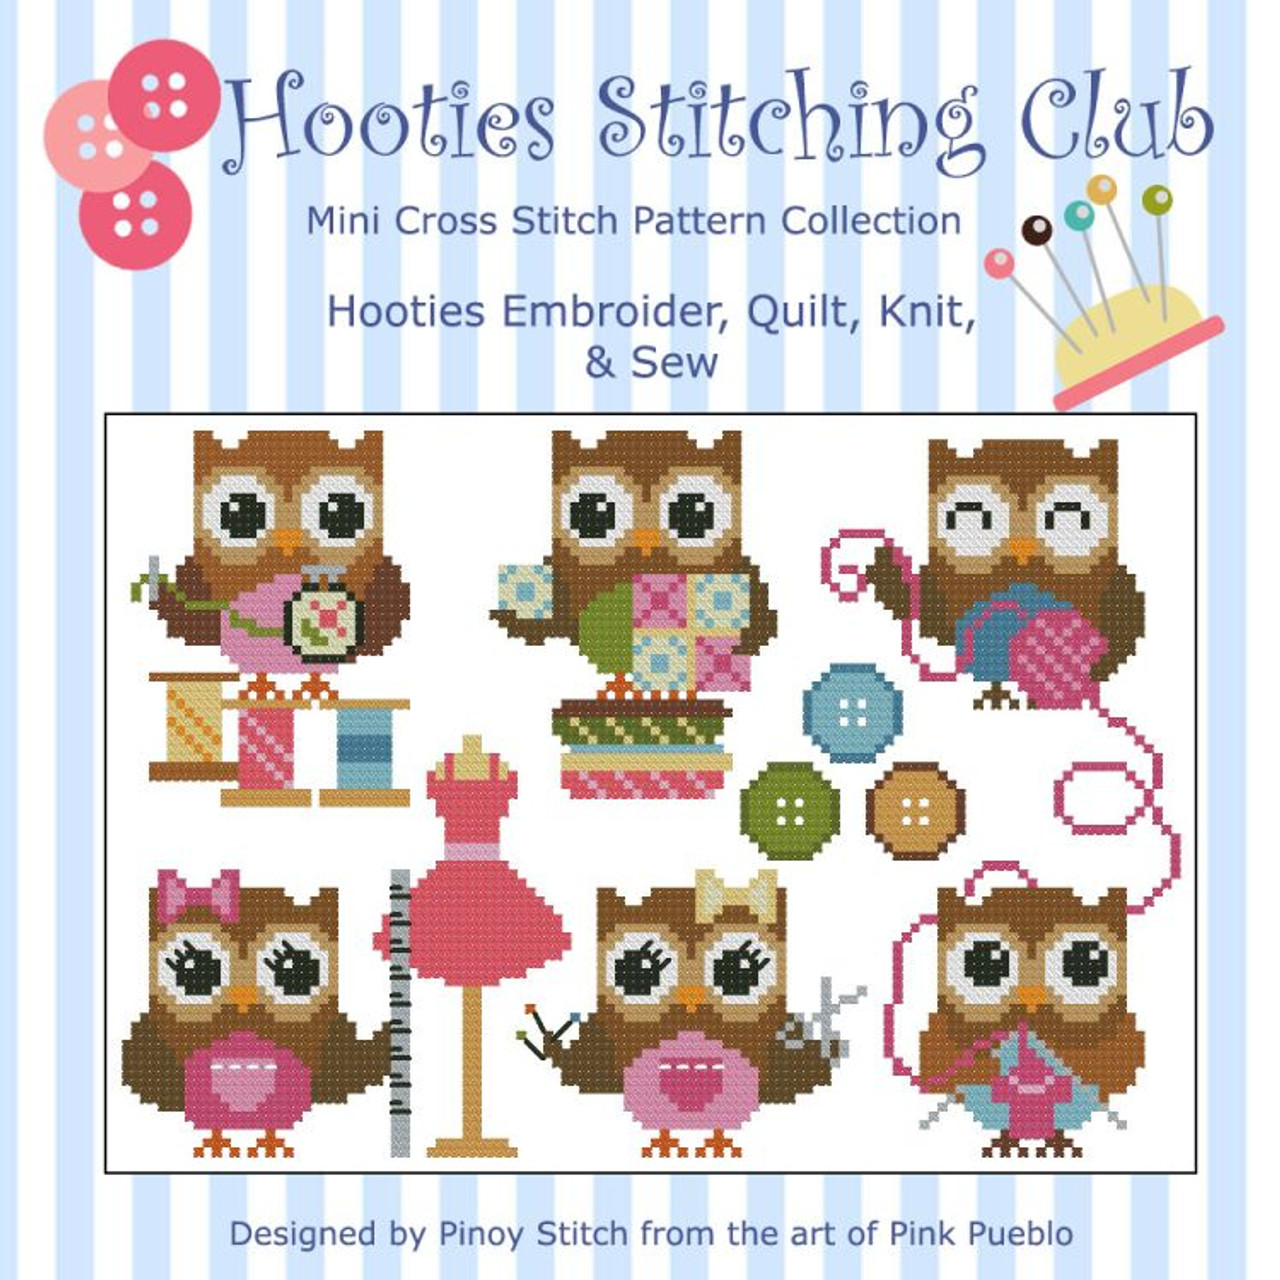 Hooties Stitching Club